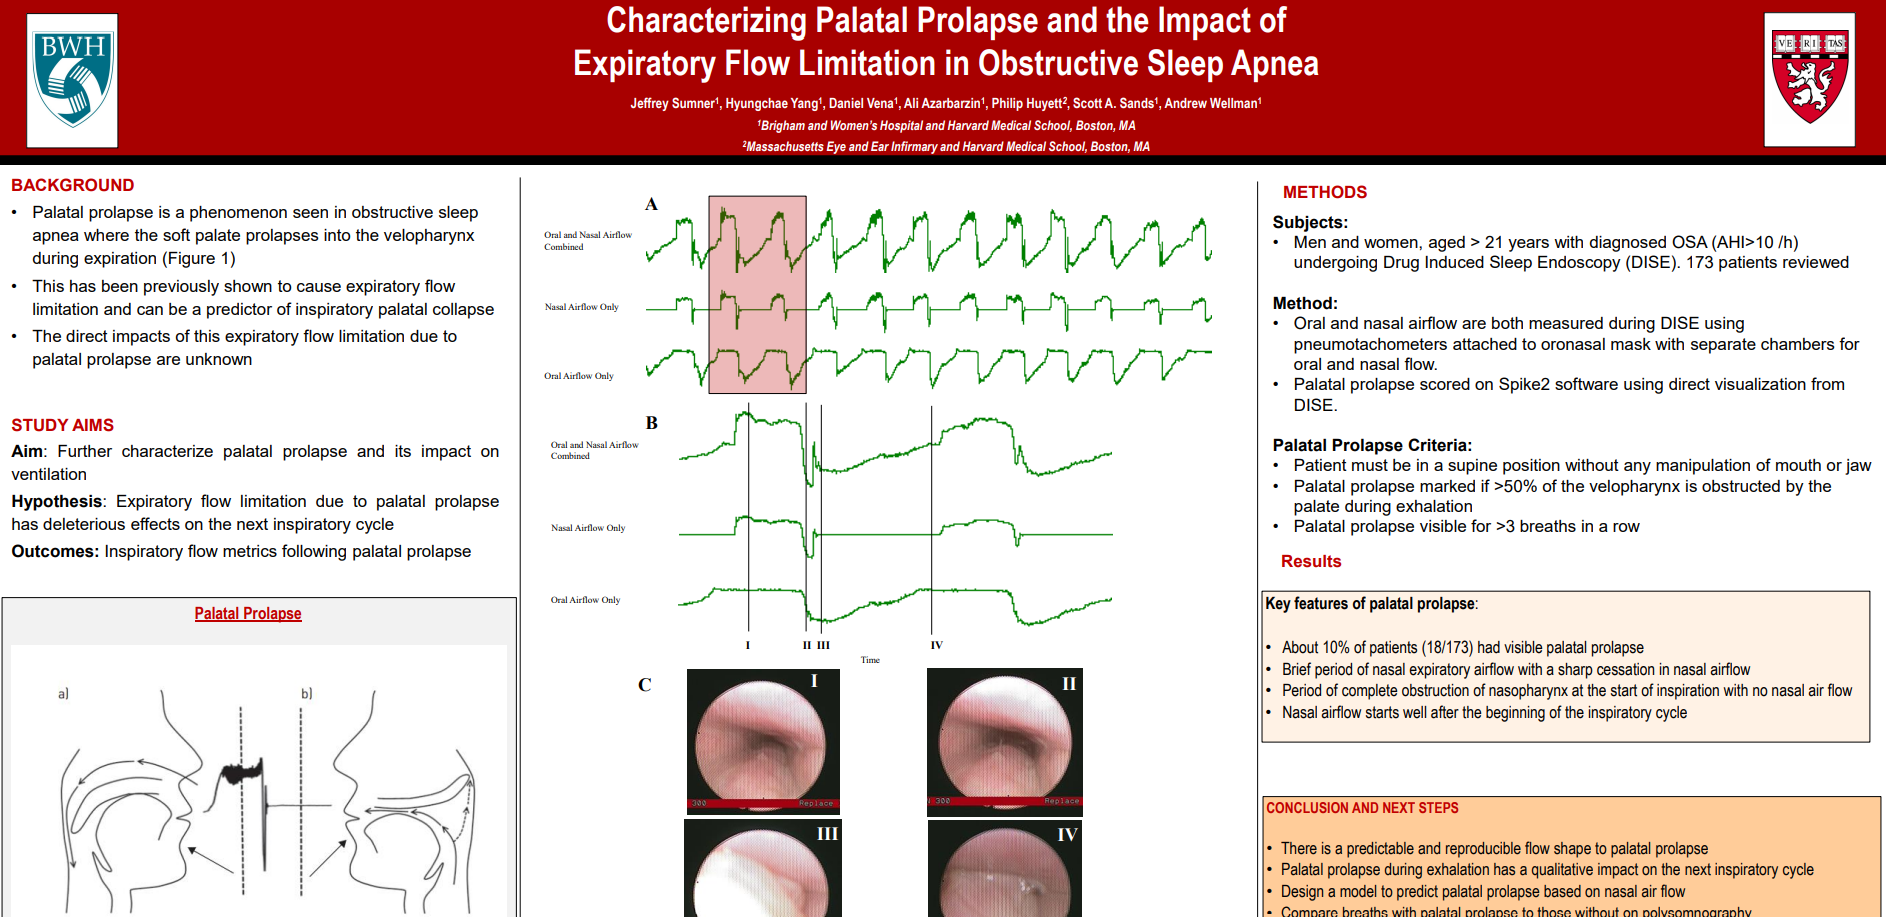 Characterizing Palatal Prolapse and the Impact of Expiratory Flow Limitation in Obstructive Sleep Apnea 2022